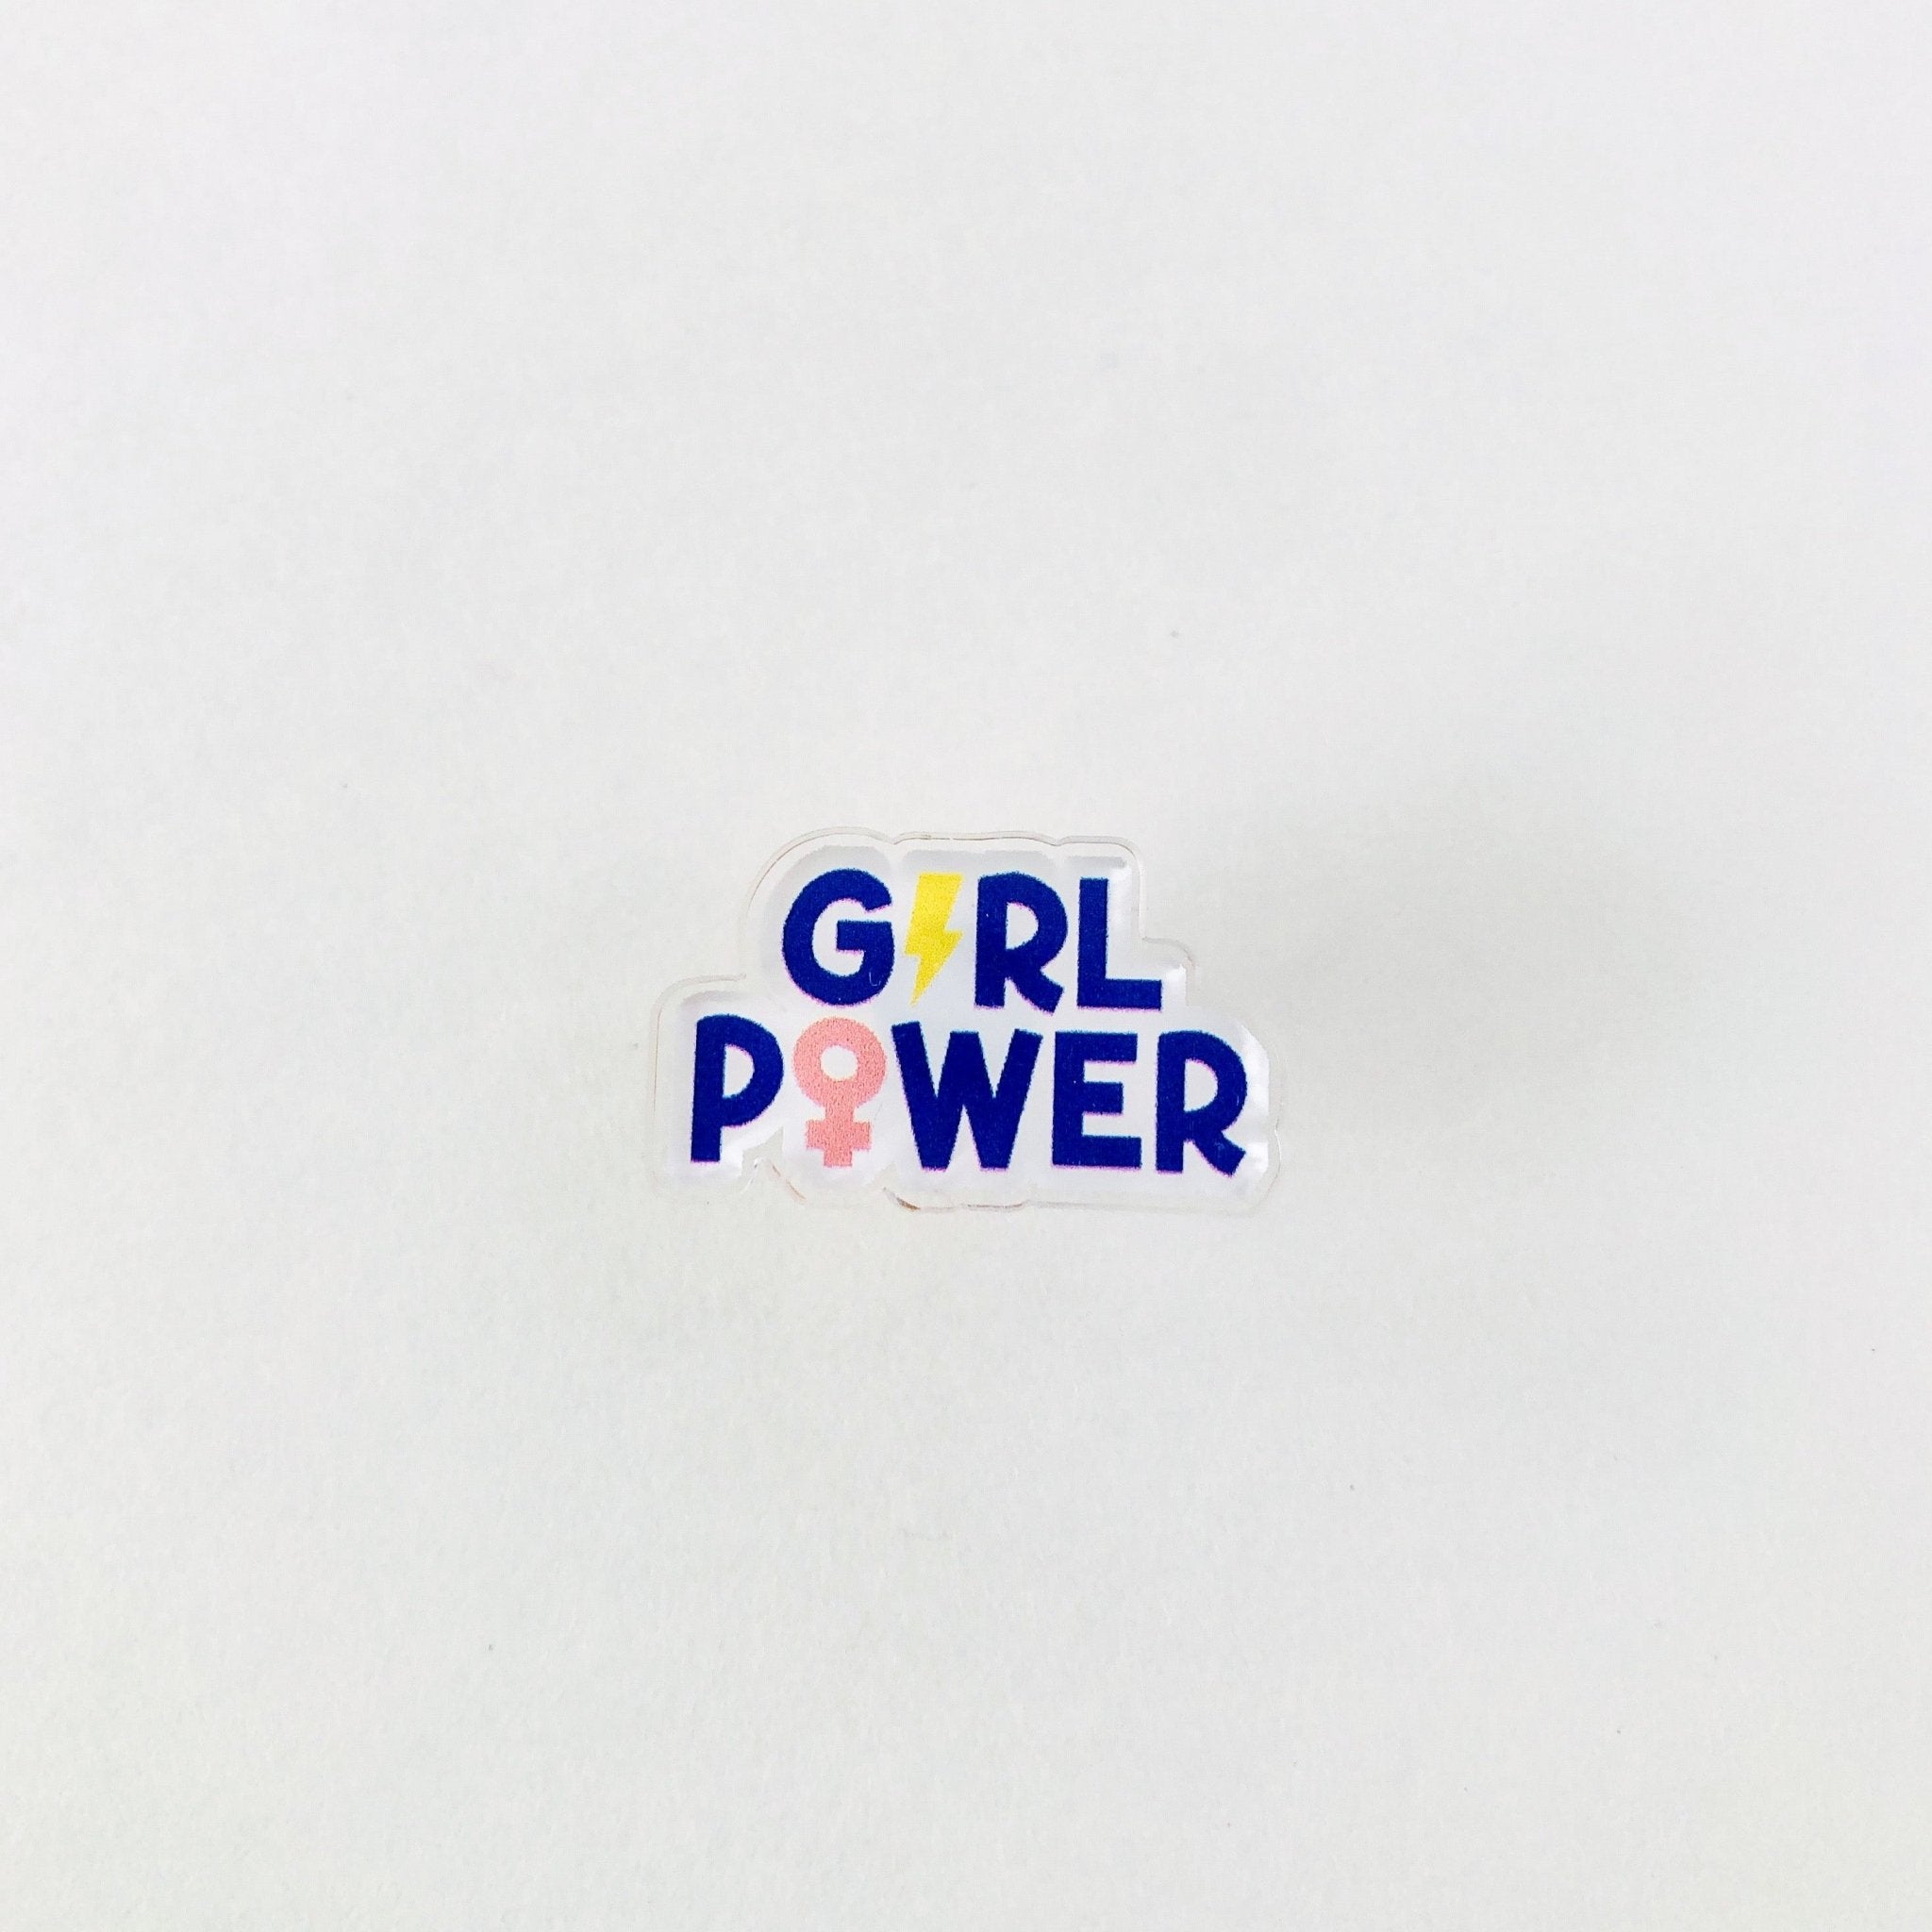 Girl power emblem badge illustration | free image by rawpixel.com | Girl  power art, Girl power, Girl power tattoo